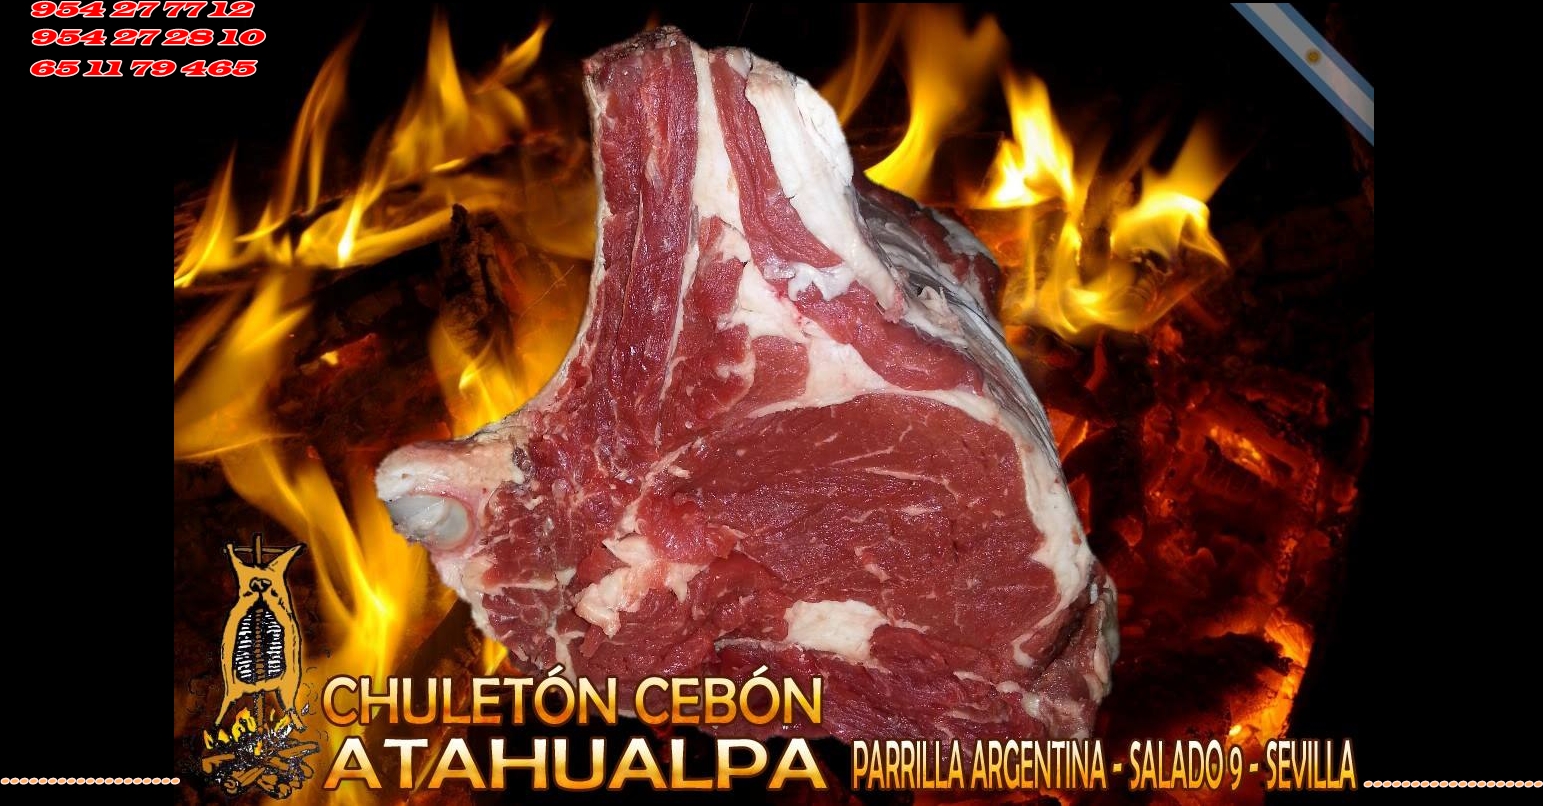 Parrilla Argentina Atahualpa